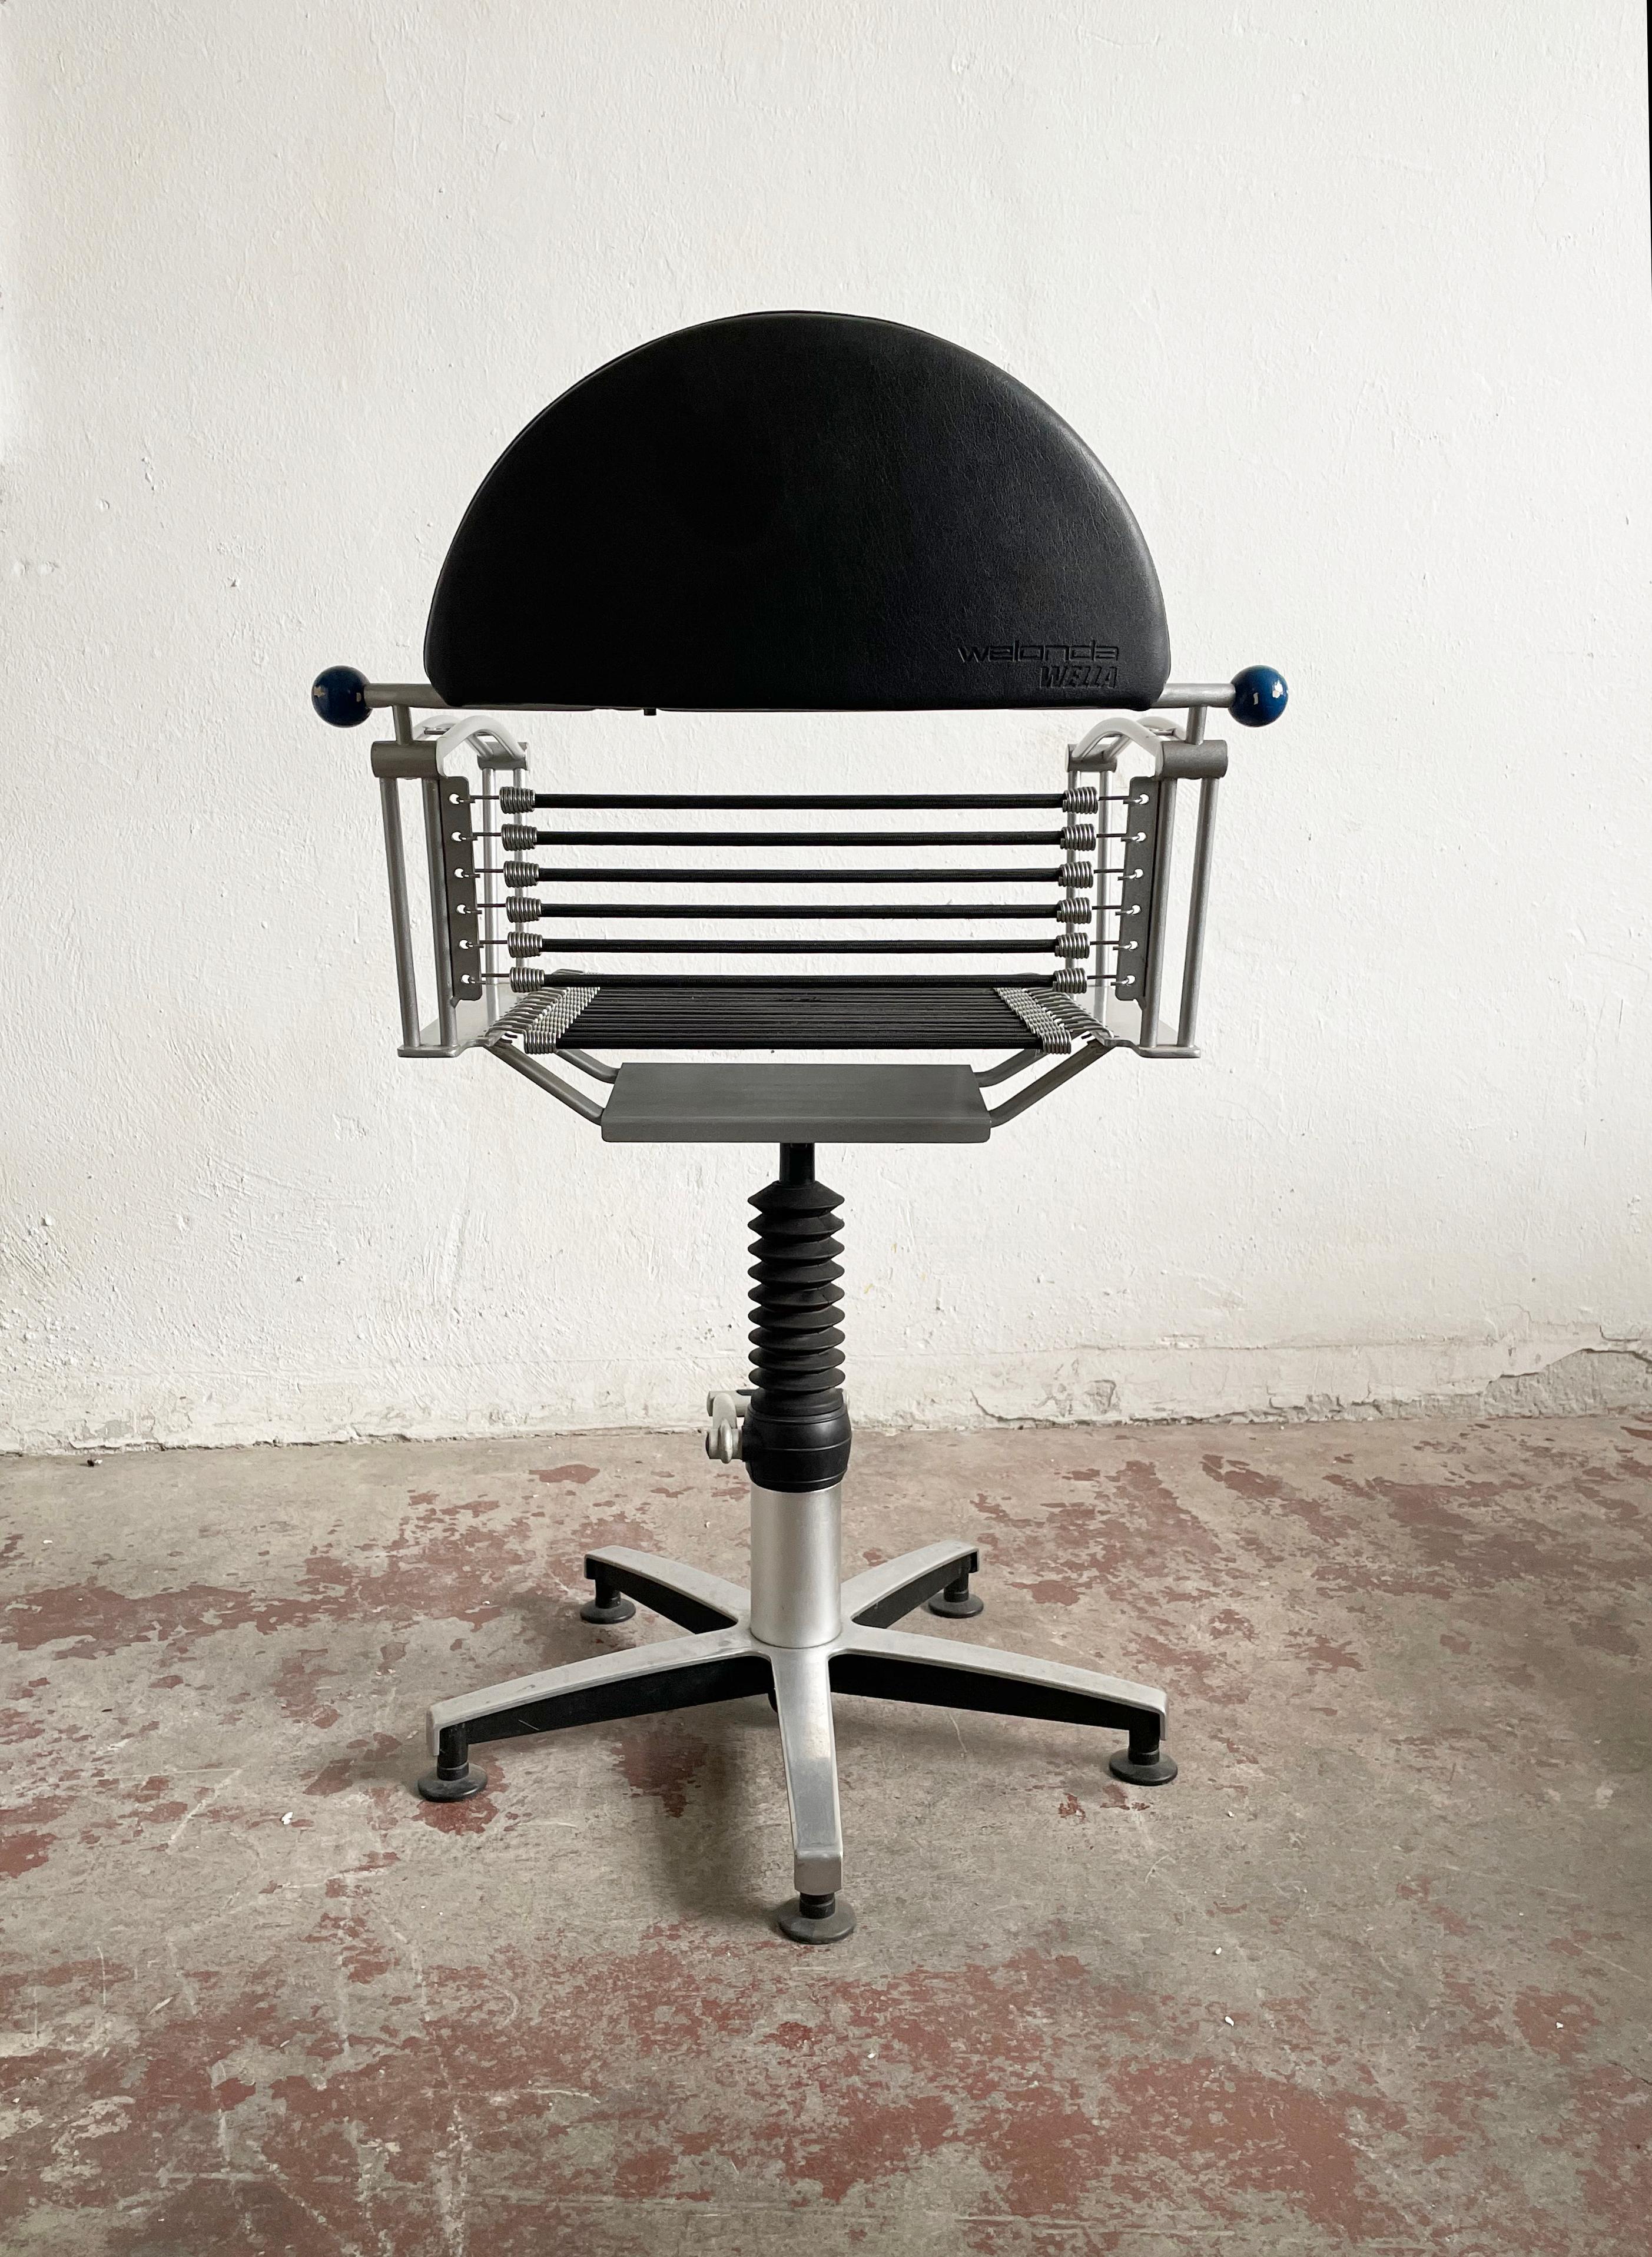 Metal Postmodern 'Welonda' Swivel Chair with Adjustable Height by Wella, Germany 1980s